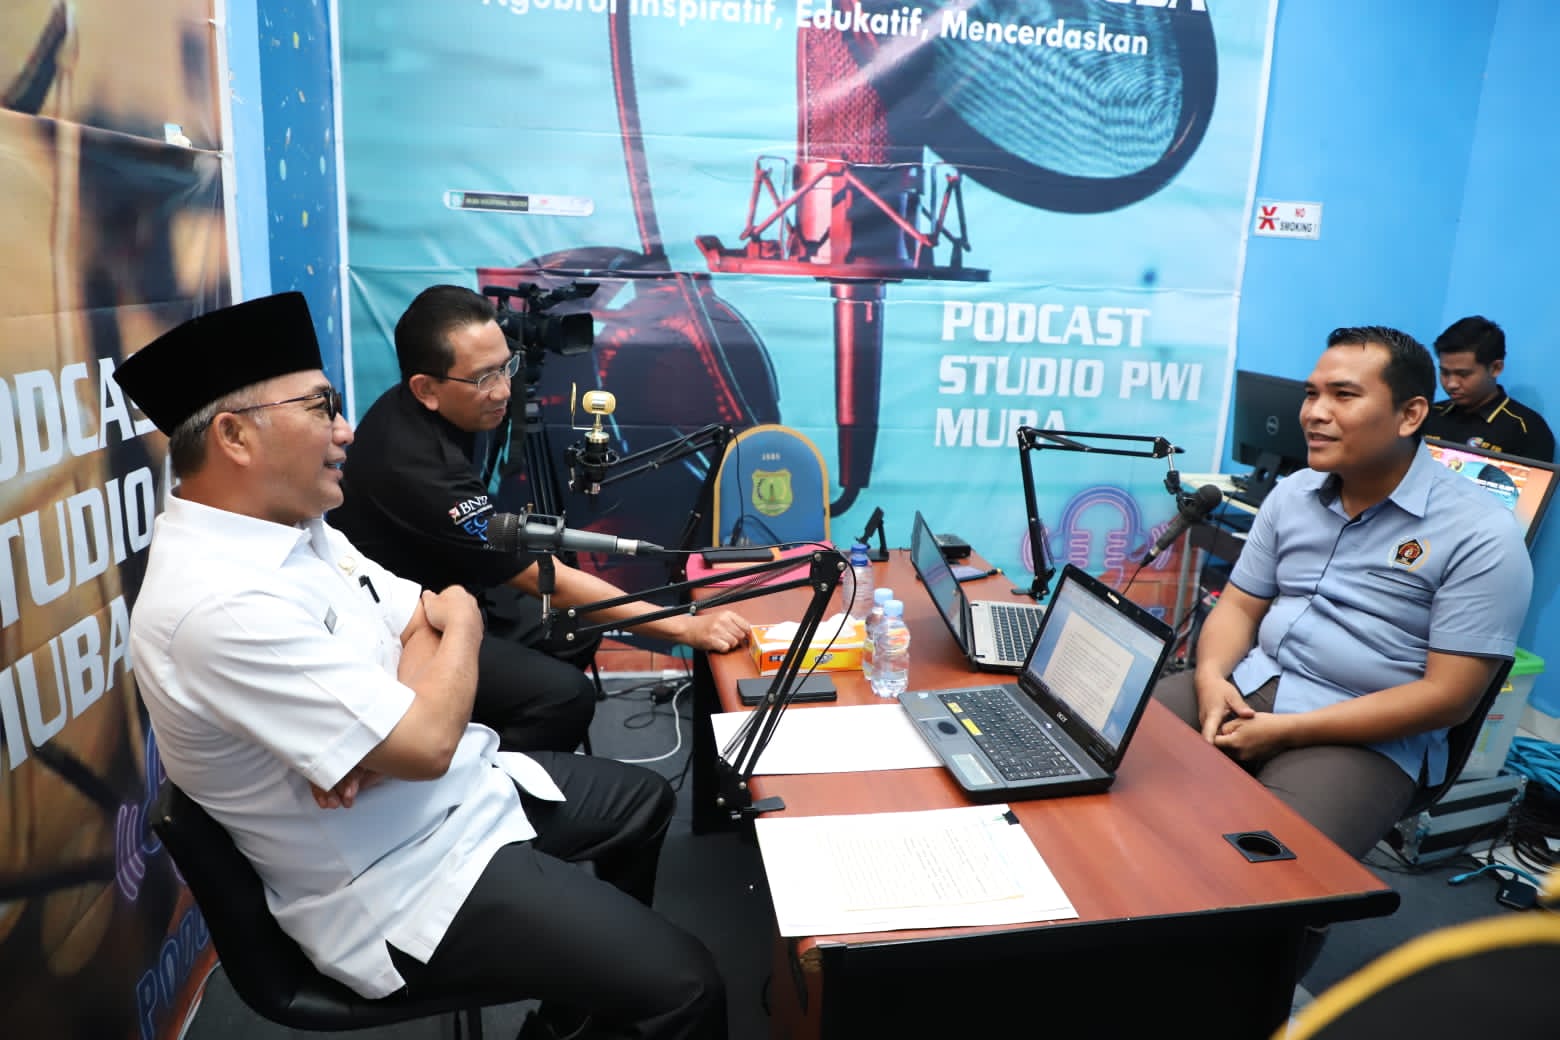 Pj Bupati Apriyadi Podcast Bareng PWI Muba, Bahas MVC dan Berdayakan SDM Lokal